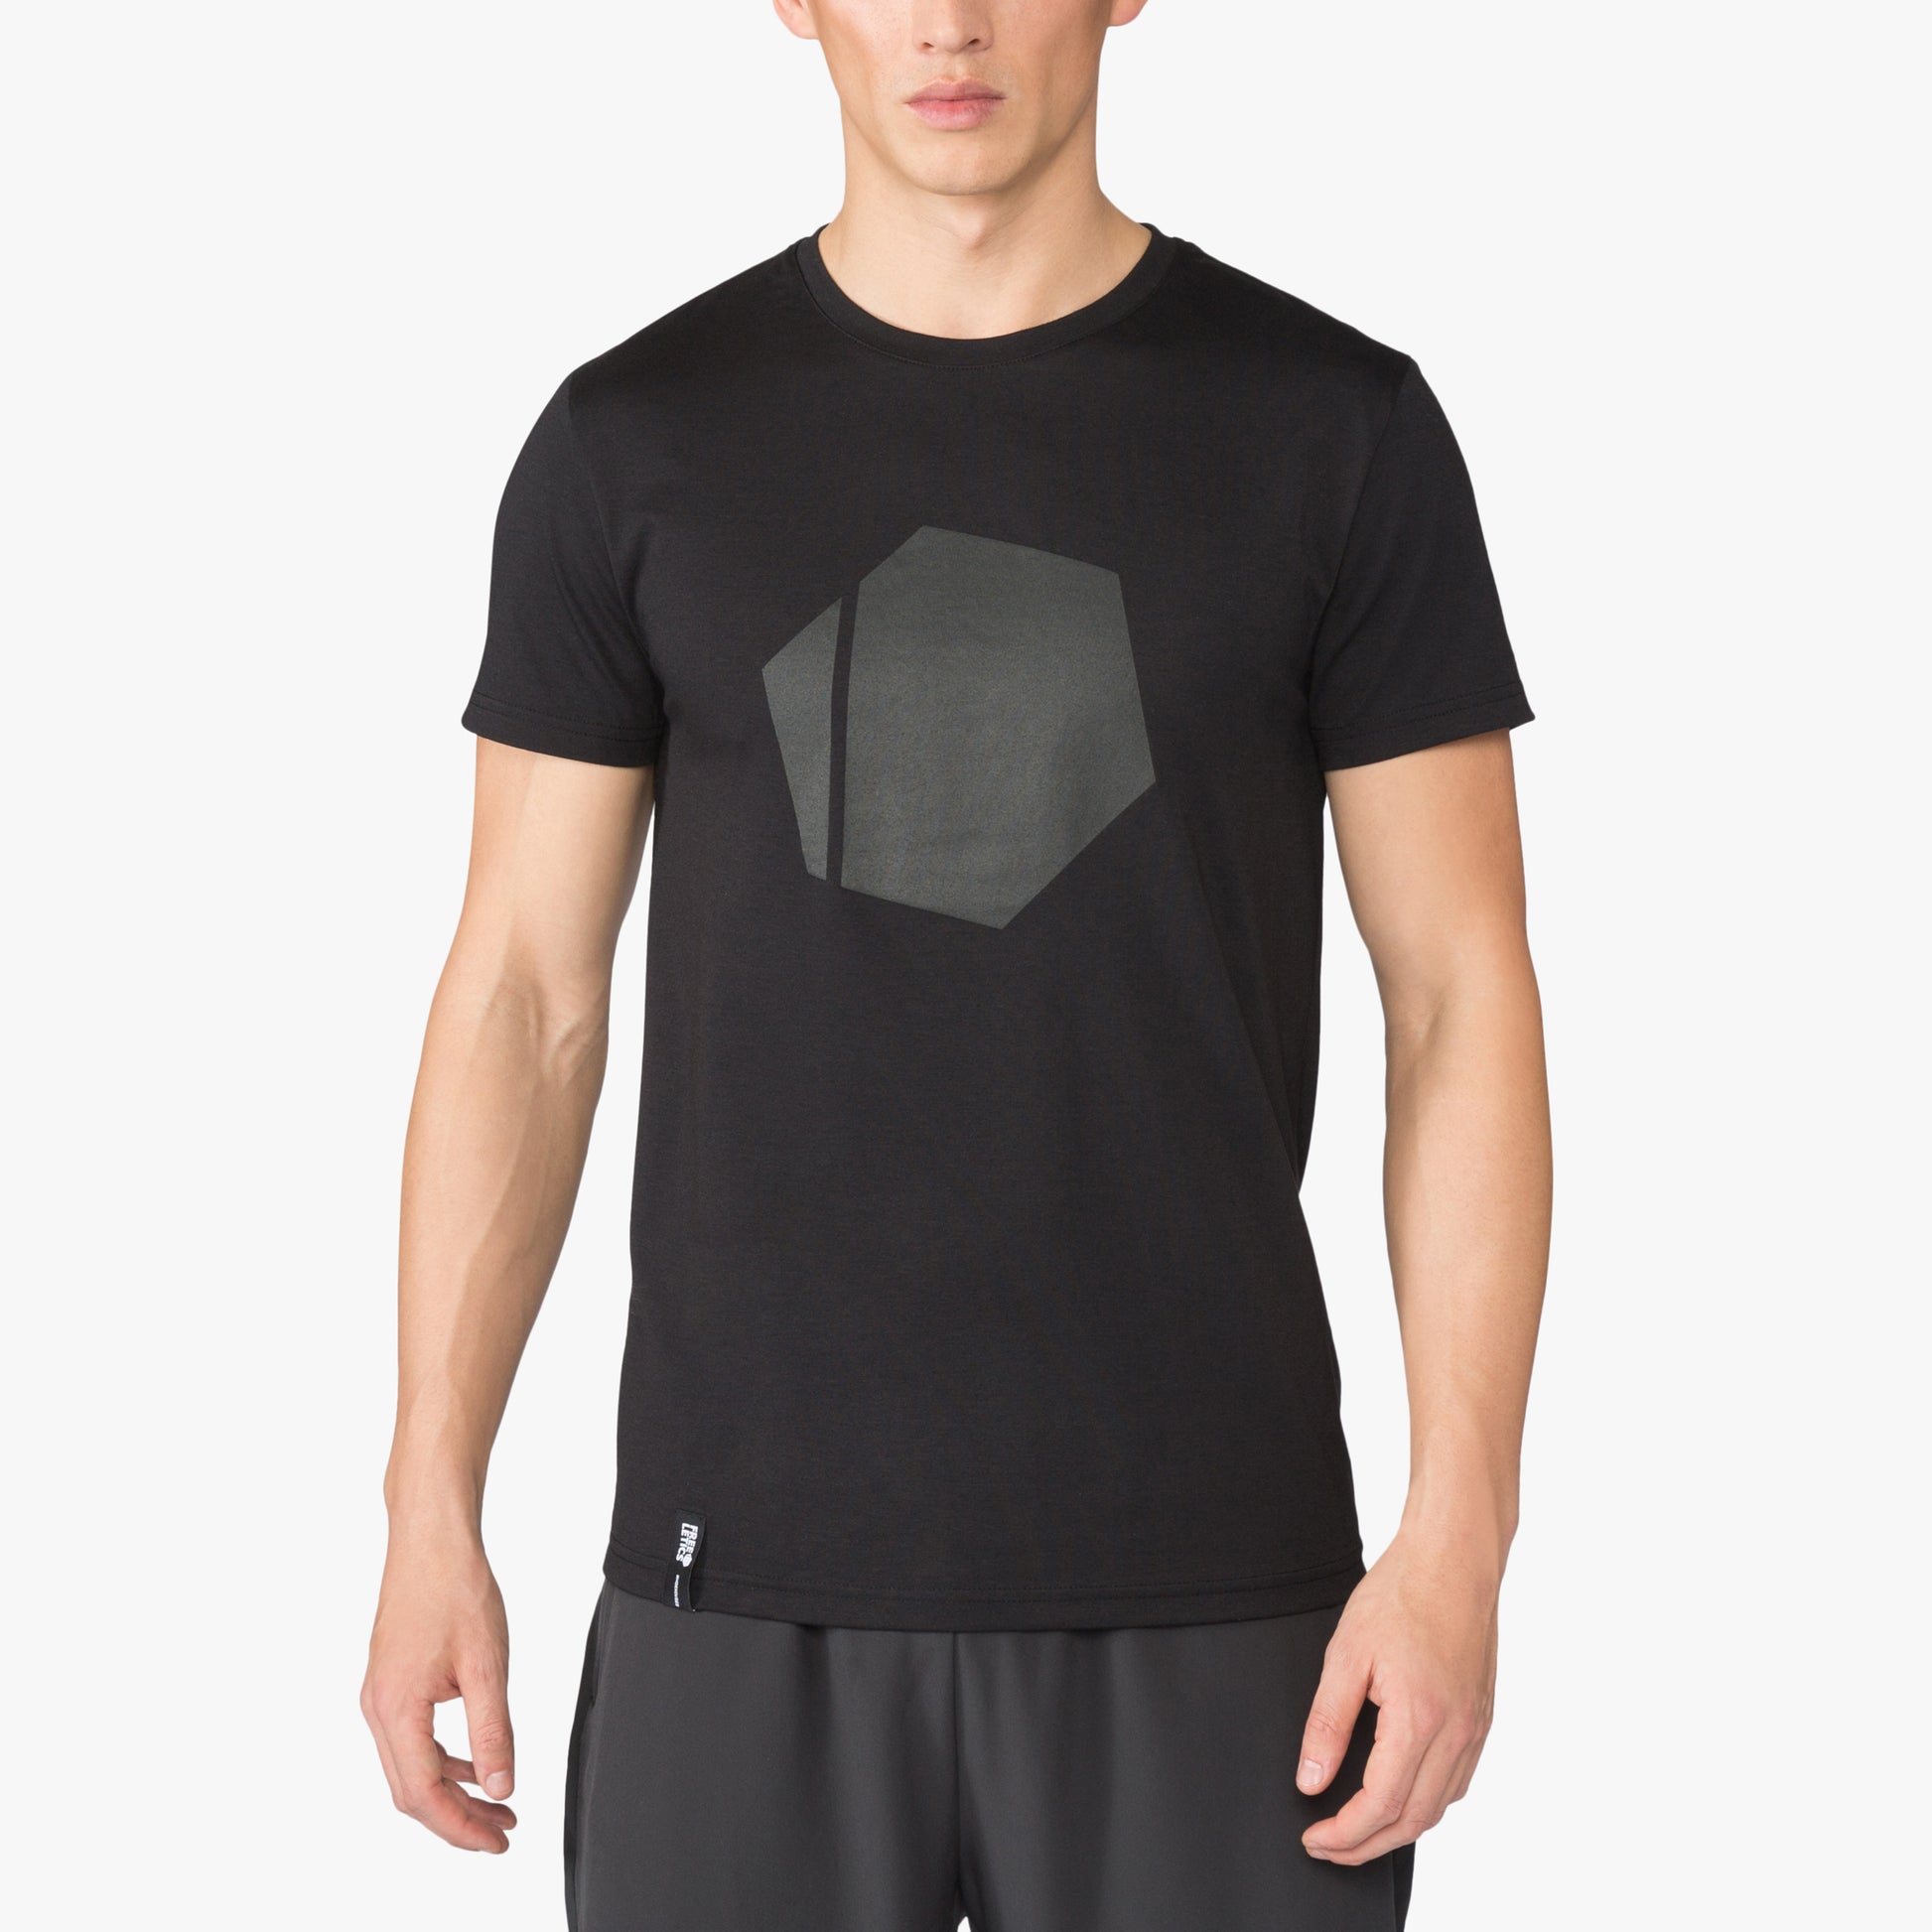 Planet Fitness Grey Cog Logo Men's Black Graphic T-Shirt Size Medium